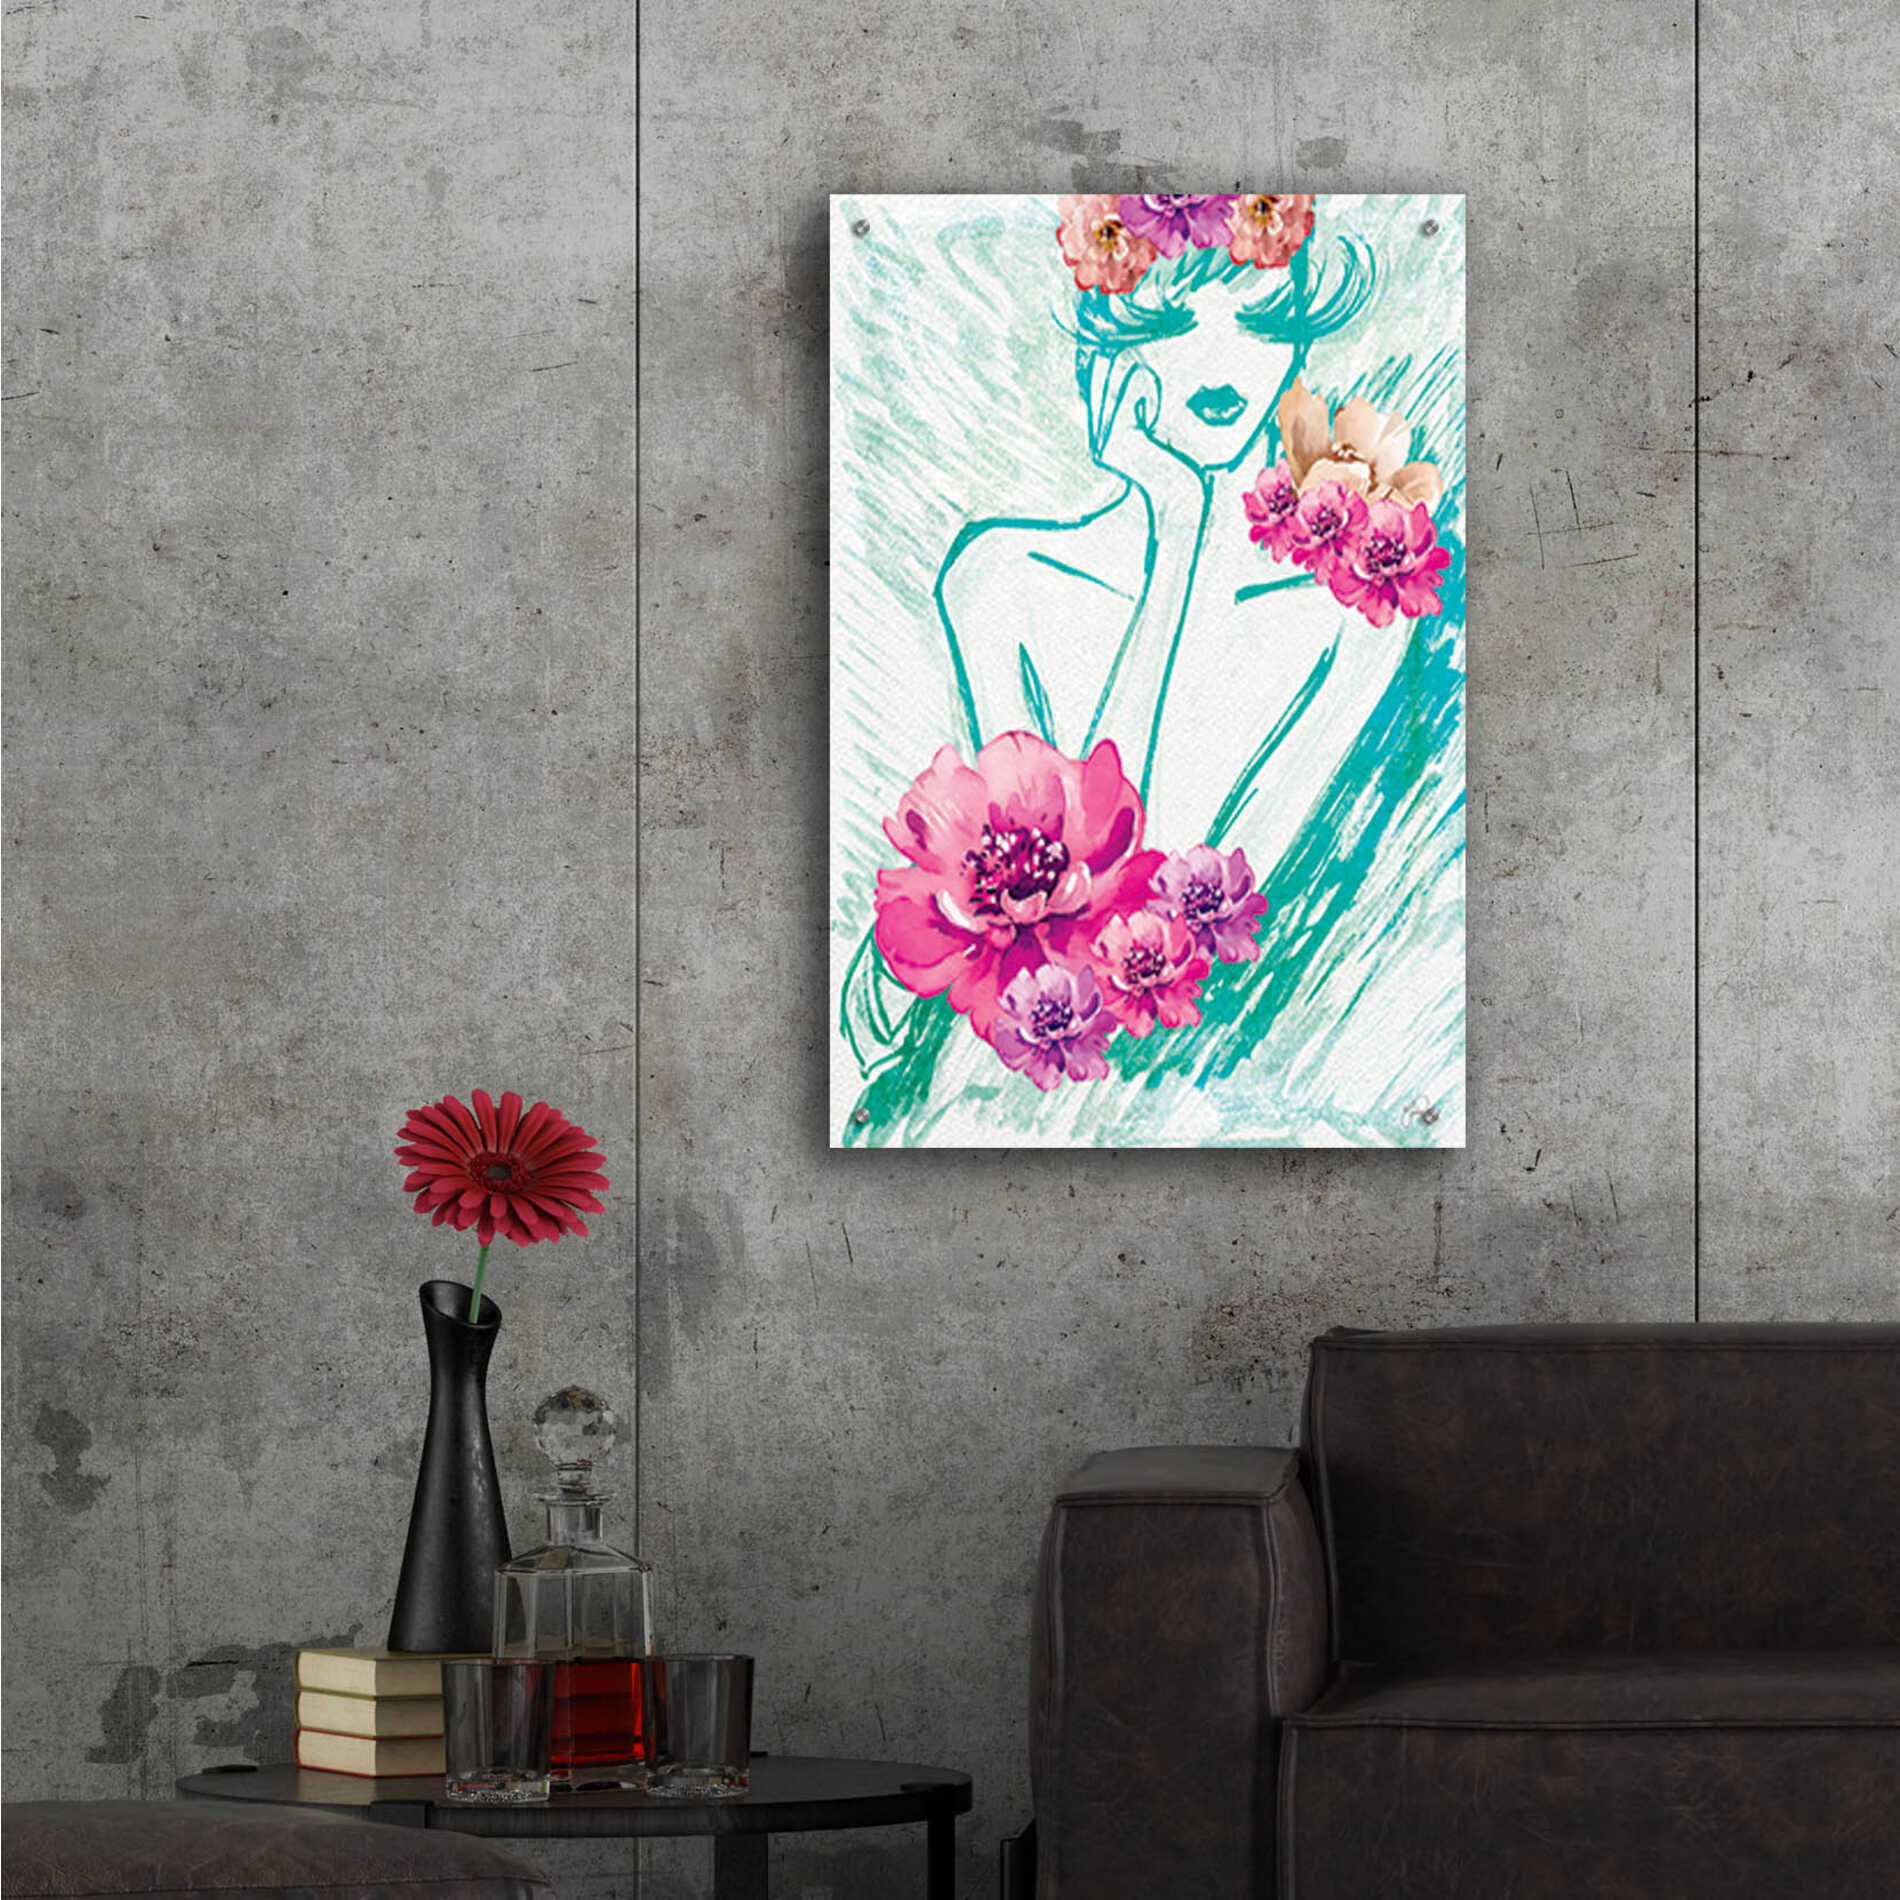 Epic Art 'Lady Serenity' by Yass Naffas Designs, Acrylic Glass Wall Art,24x36